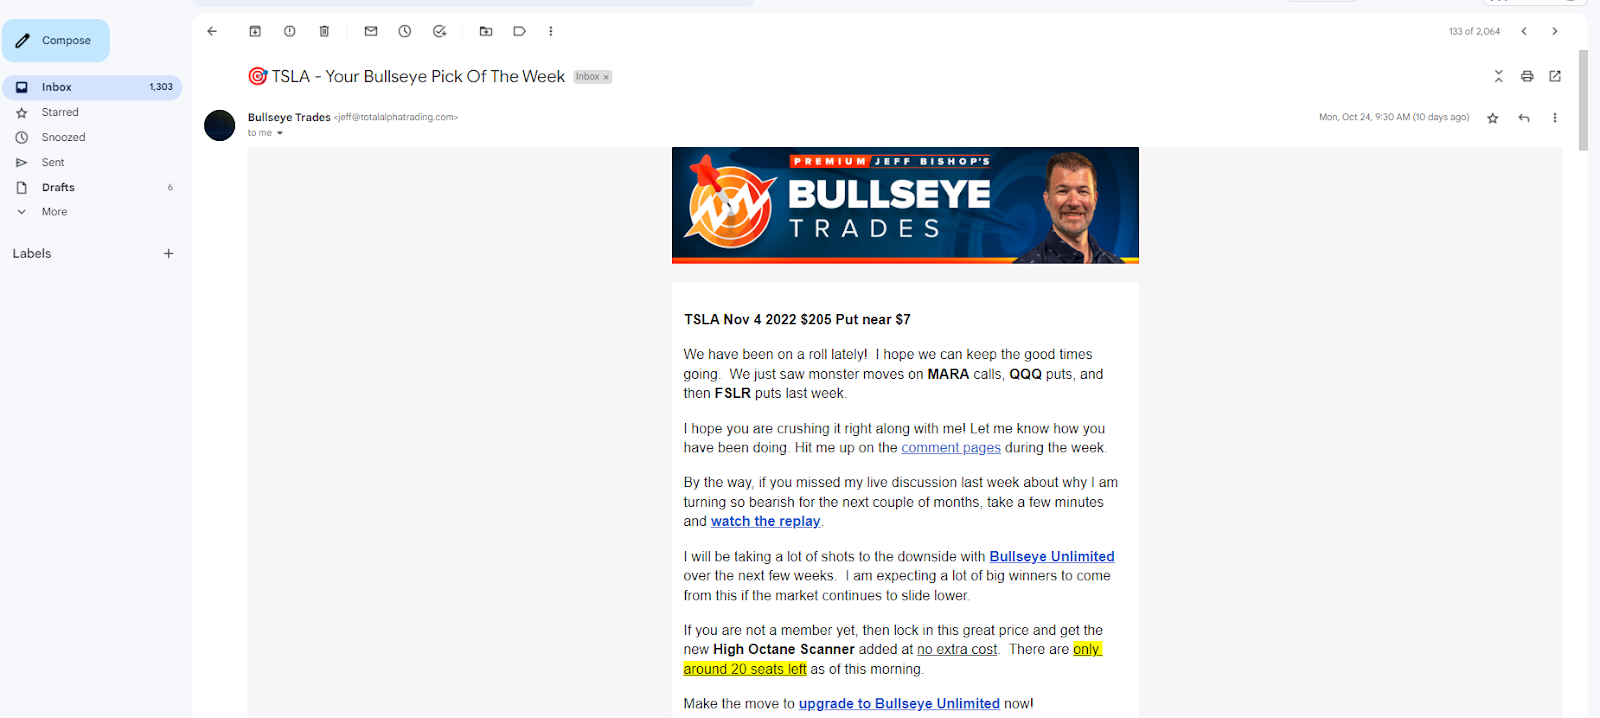 Bullseye trades email